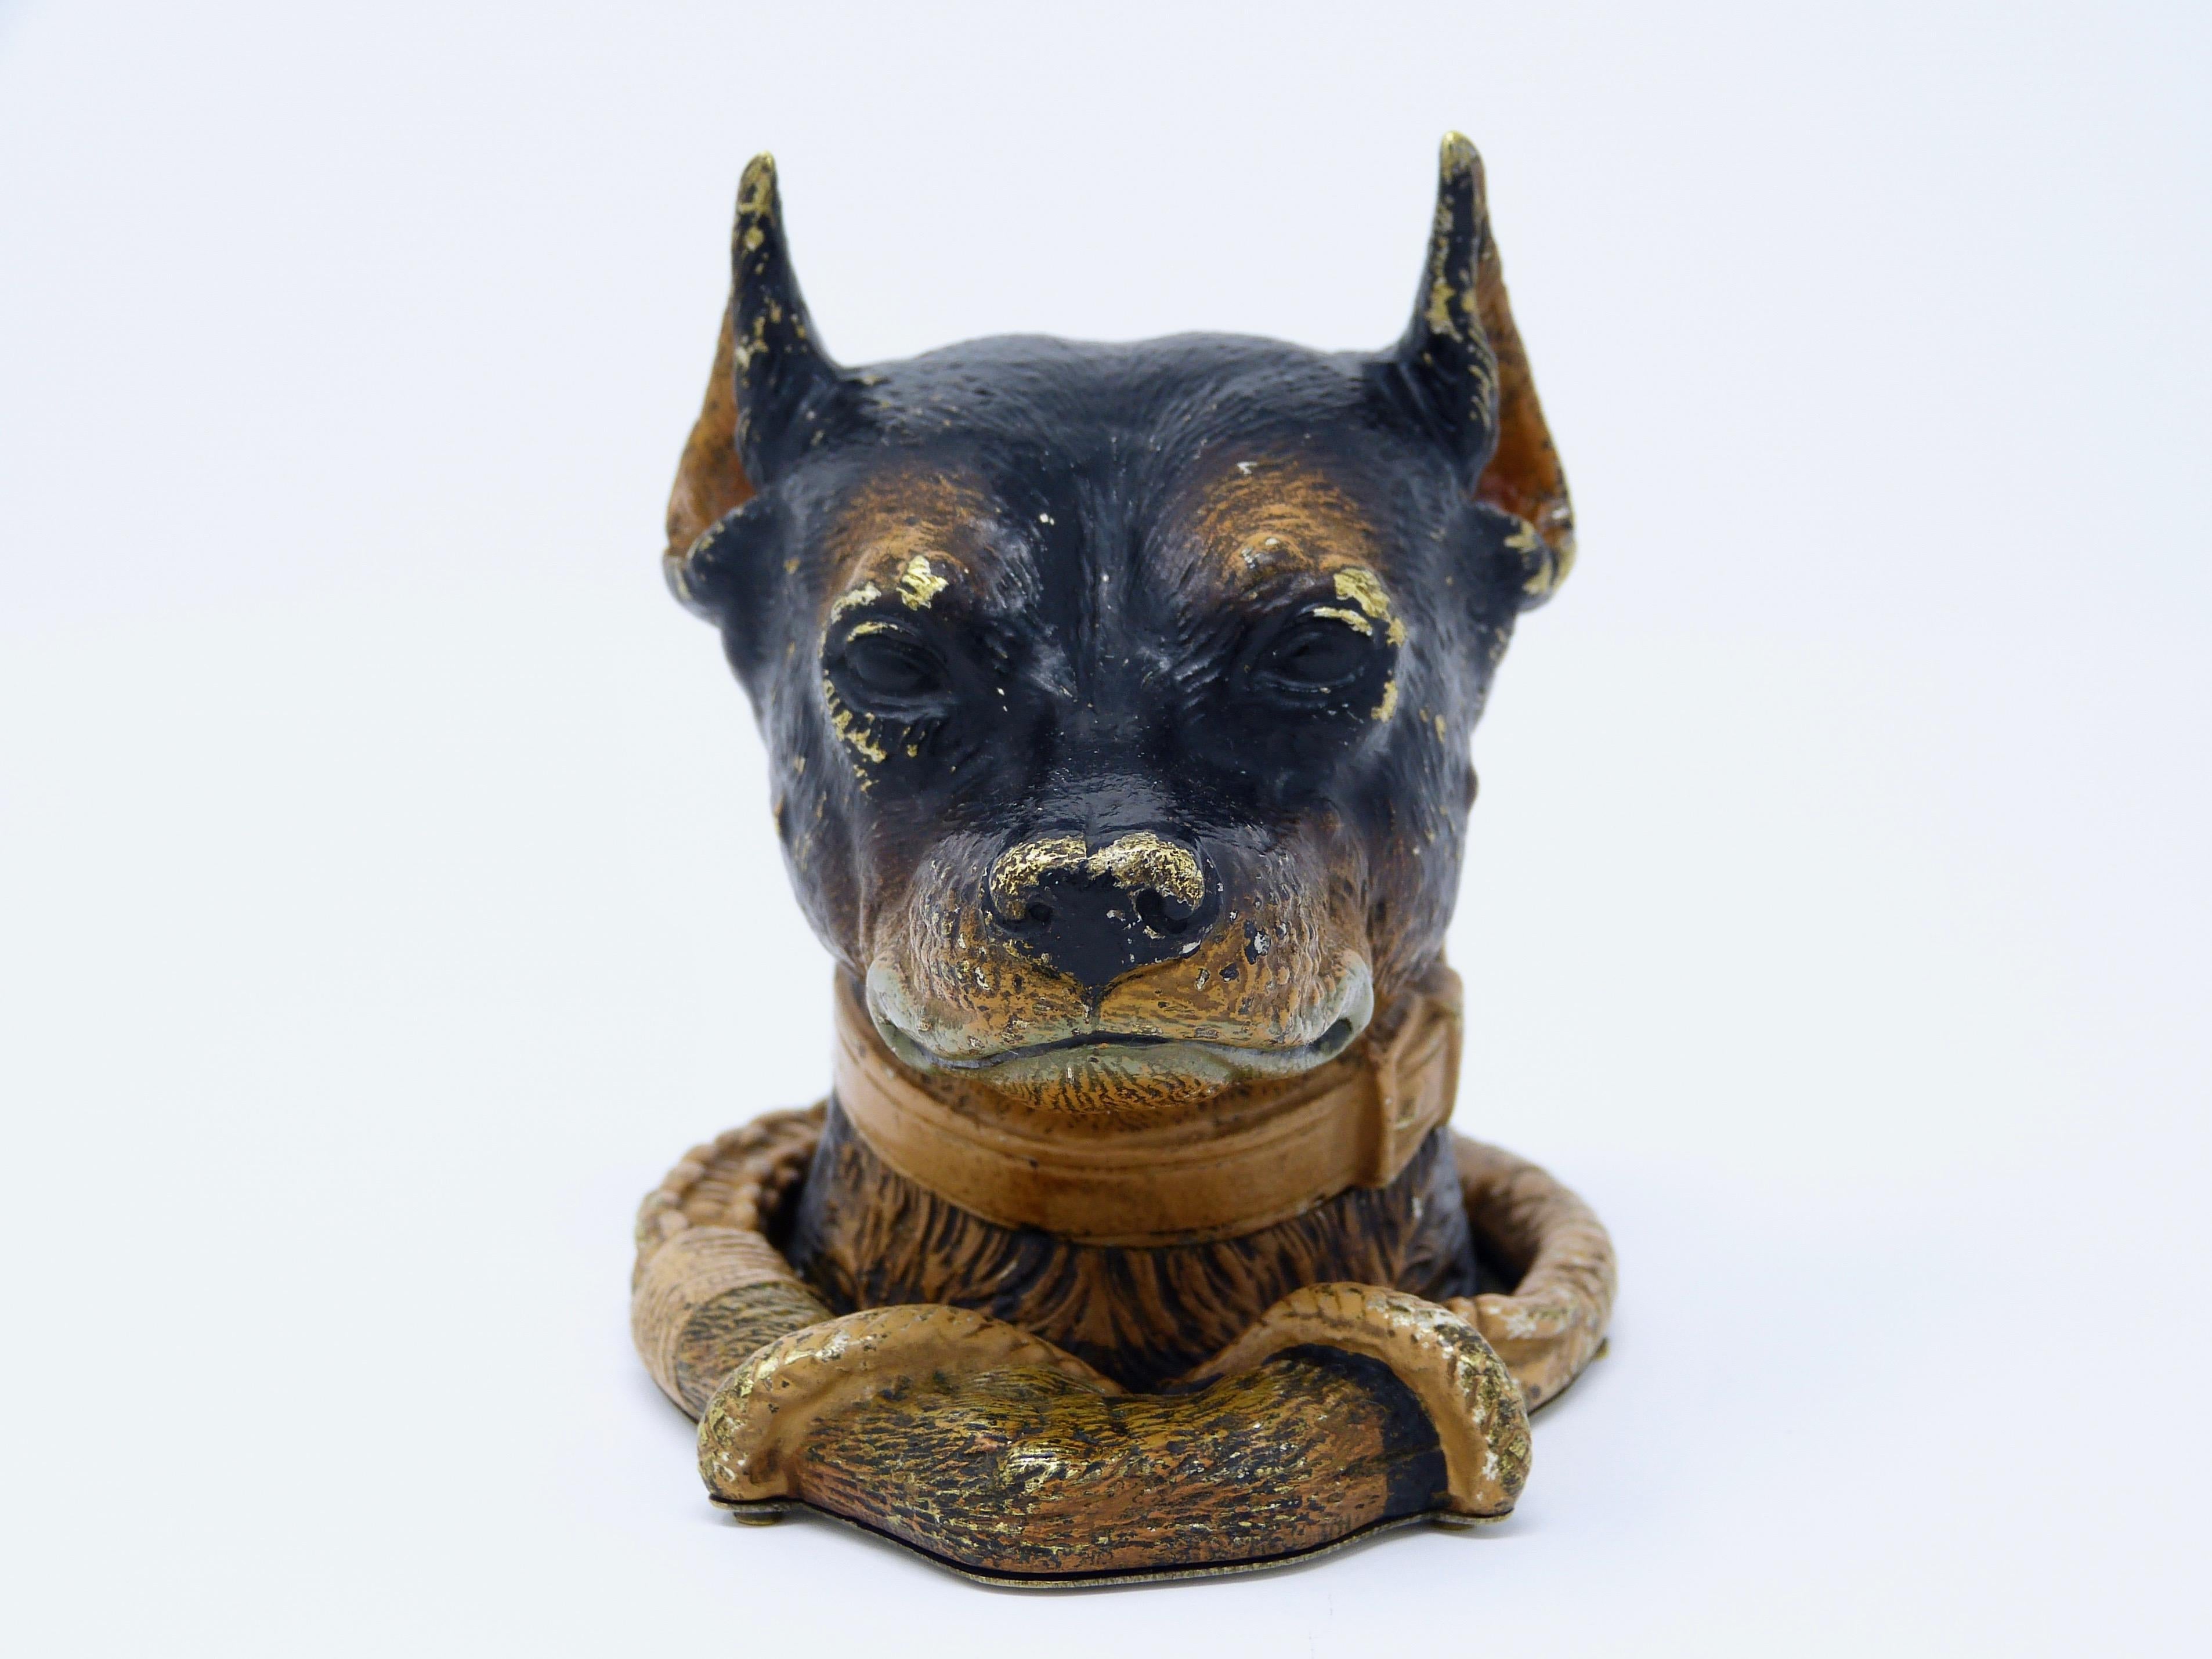 Antique Vienna bronze dog inkwell
circa 1900
Has the insert.